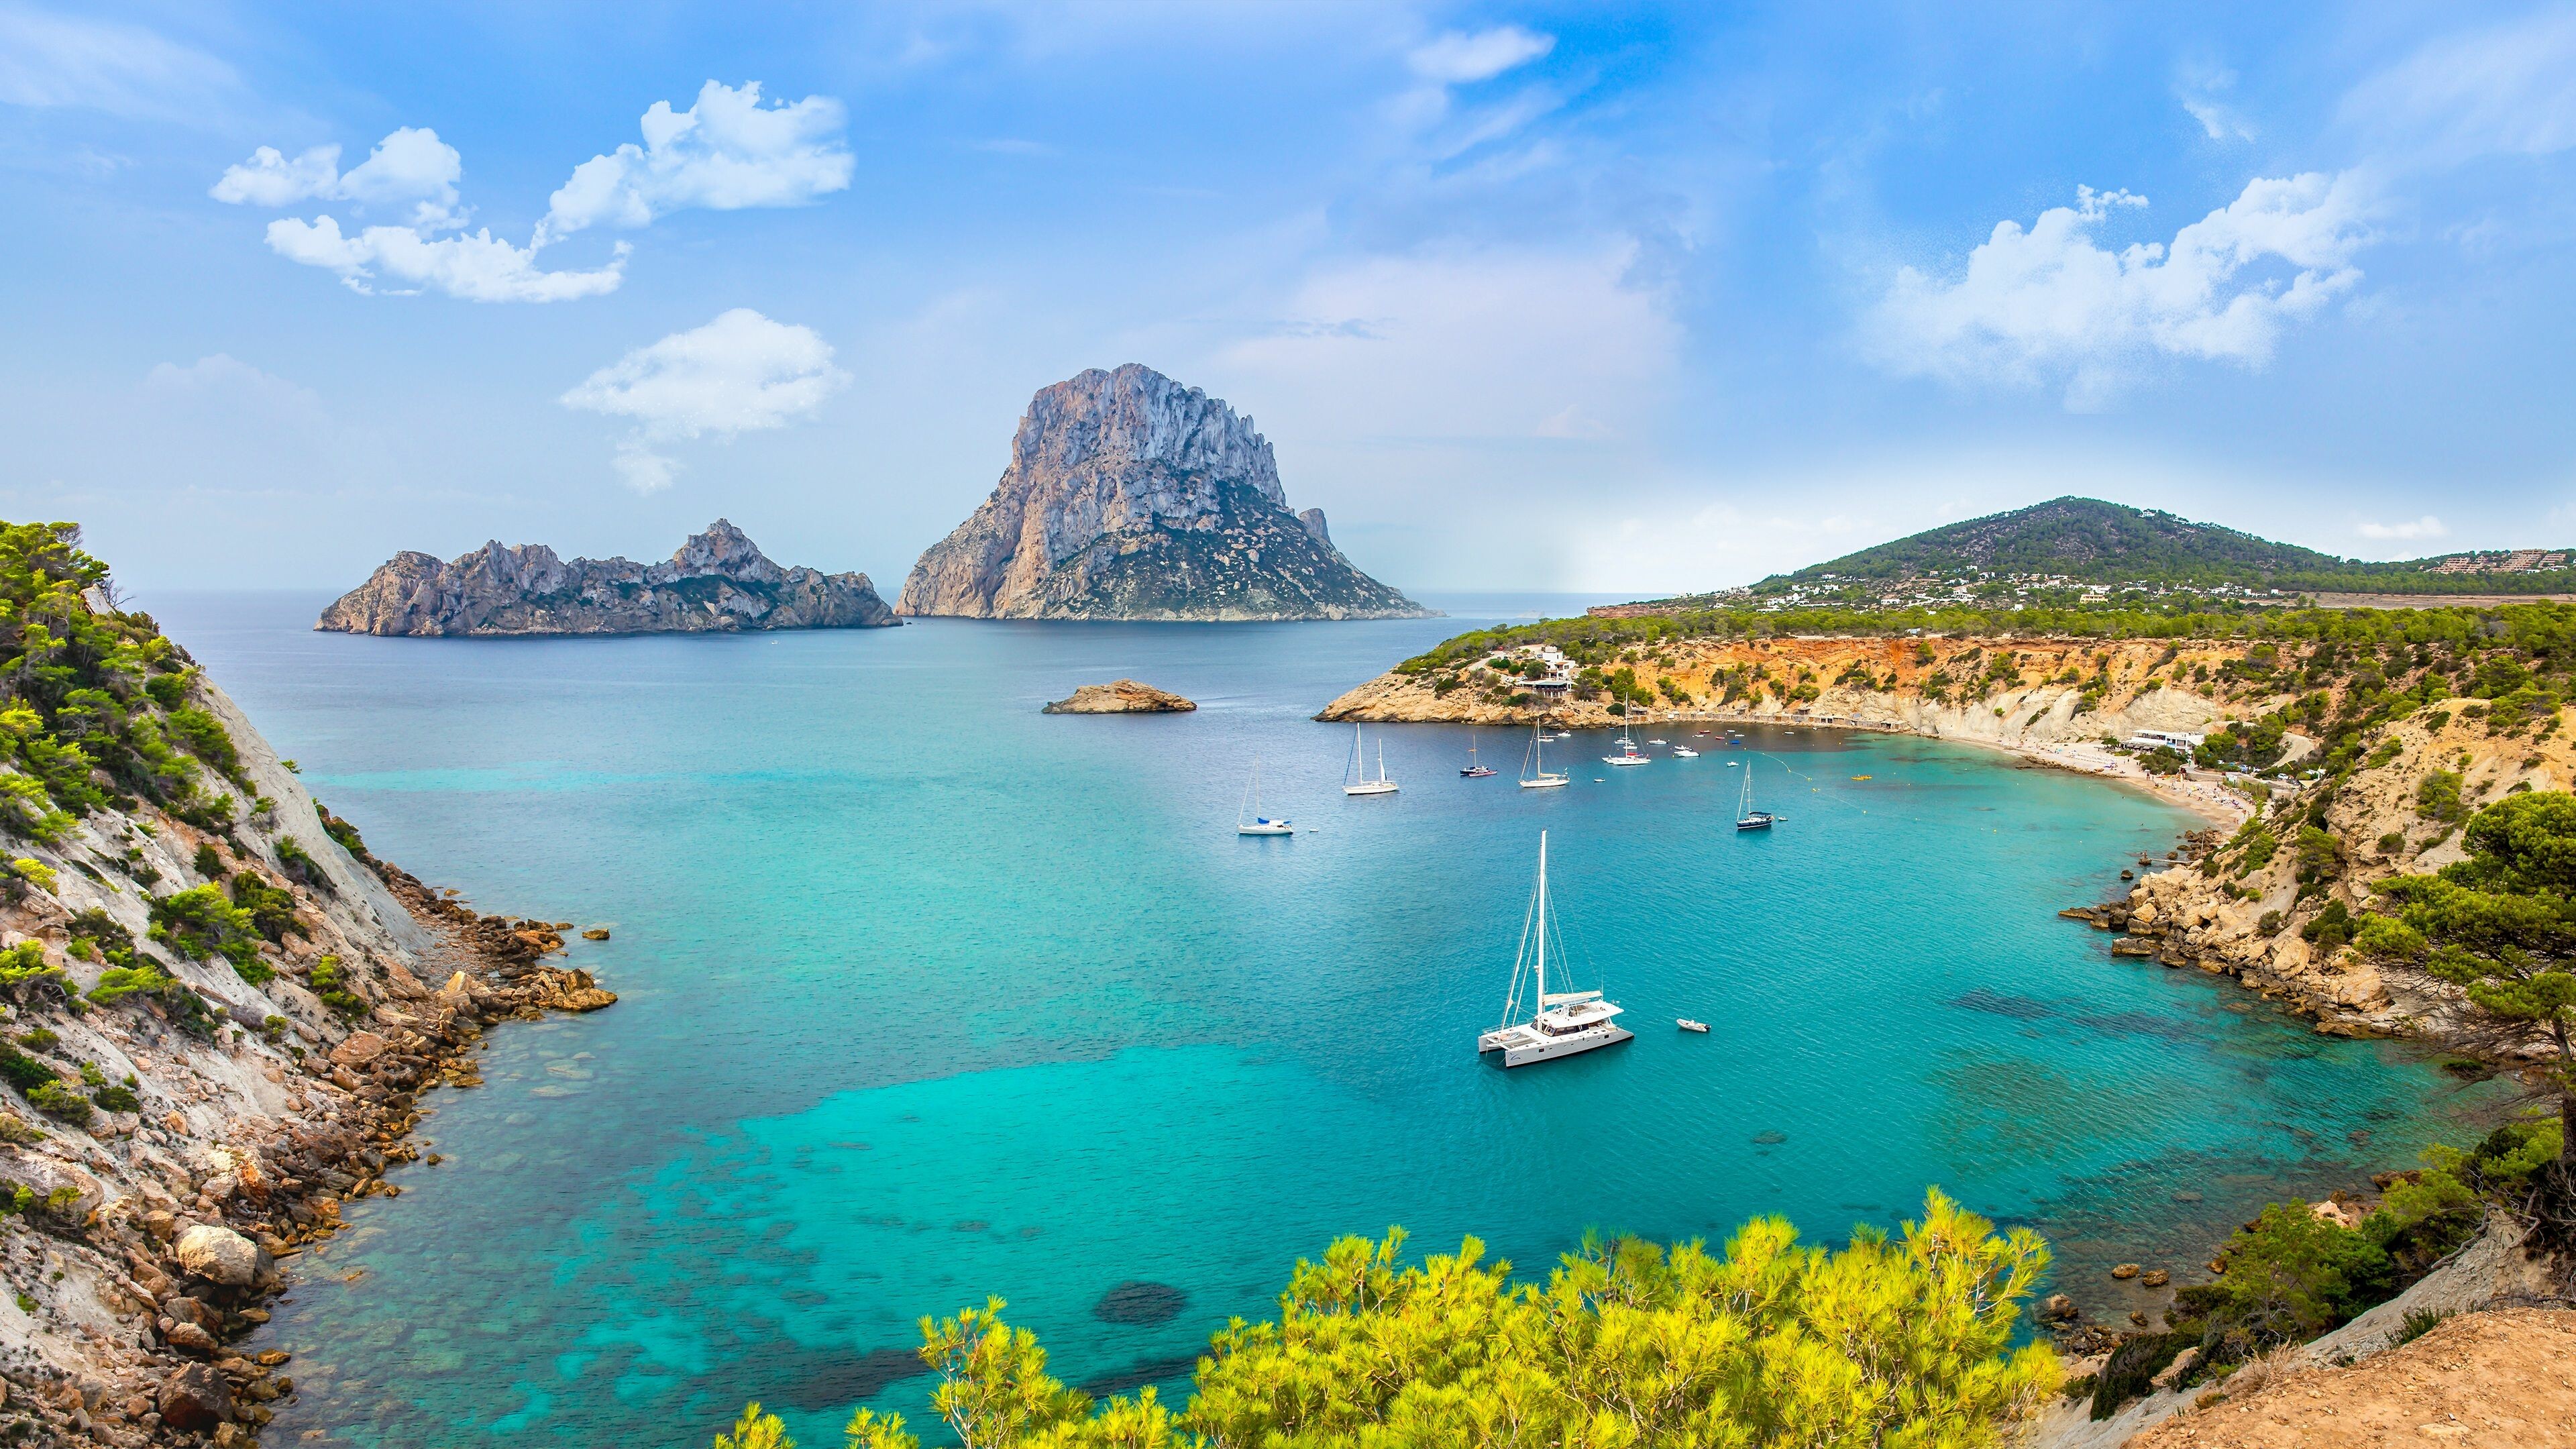 Ibiza: Es Vedra, Natural landscape, A small rocky island. 3840x2160 4K Wallpaper.